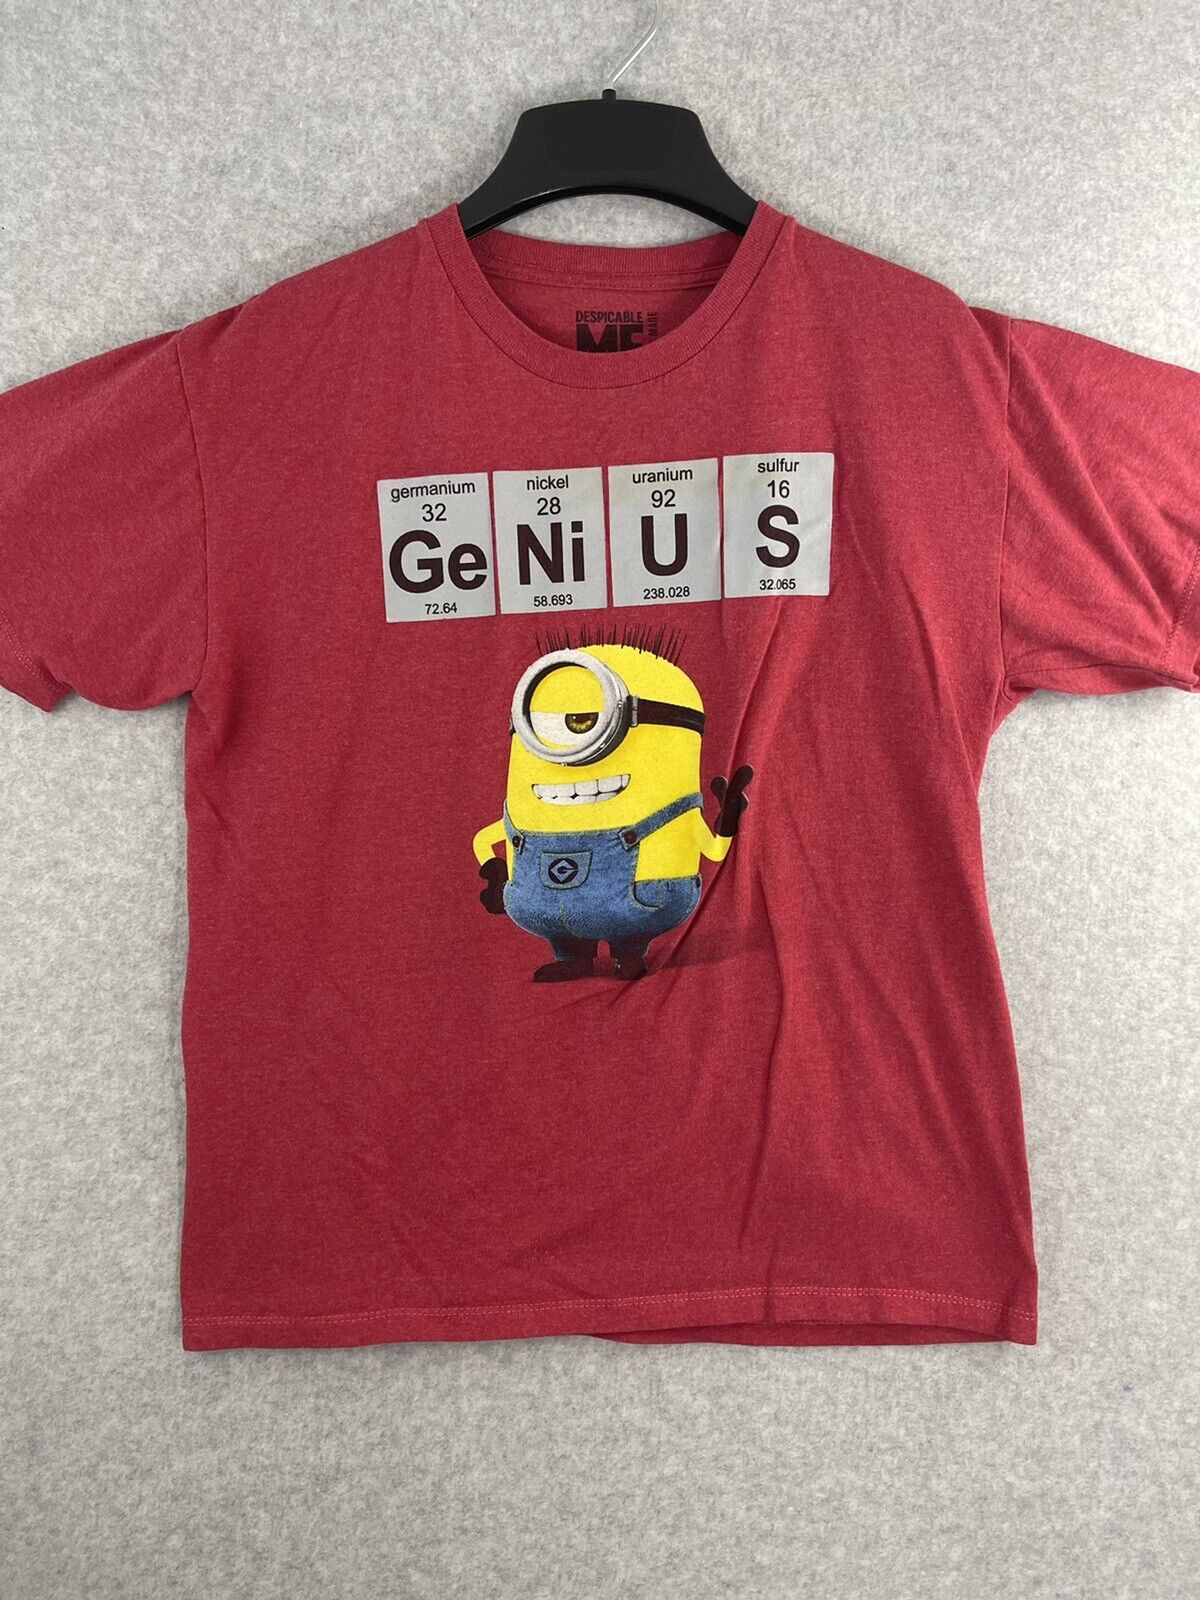 Minions T-Shirt | eBay